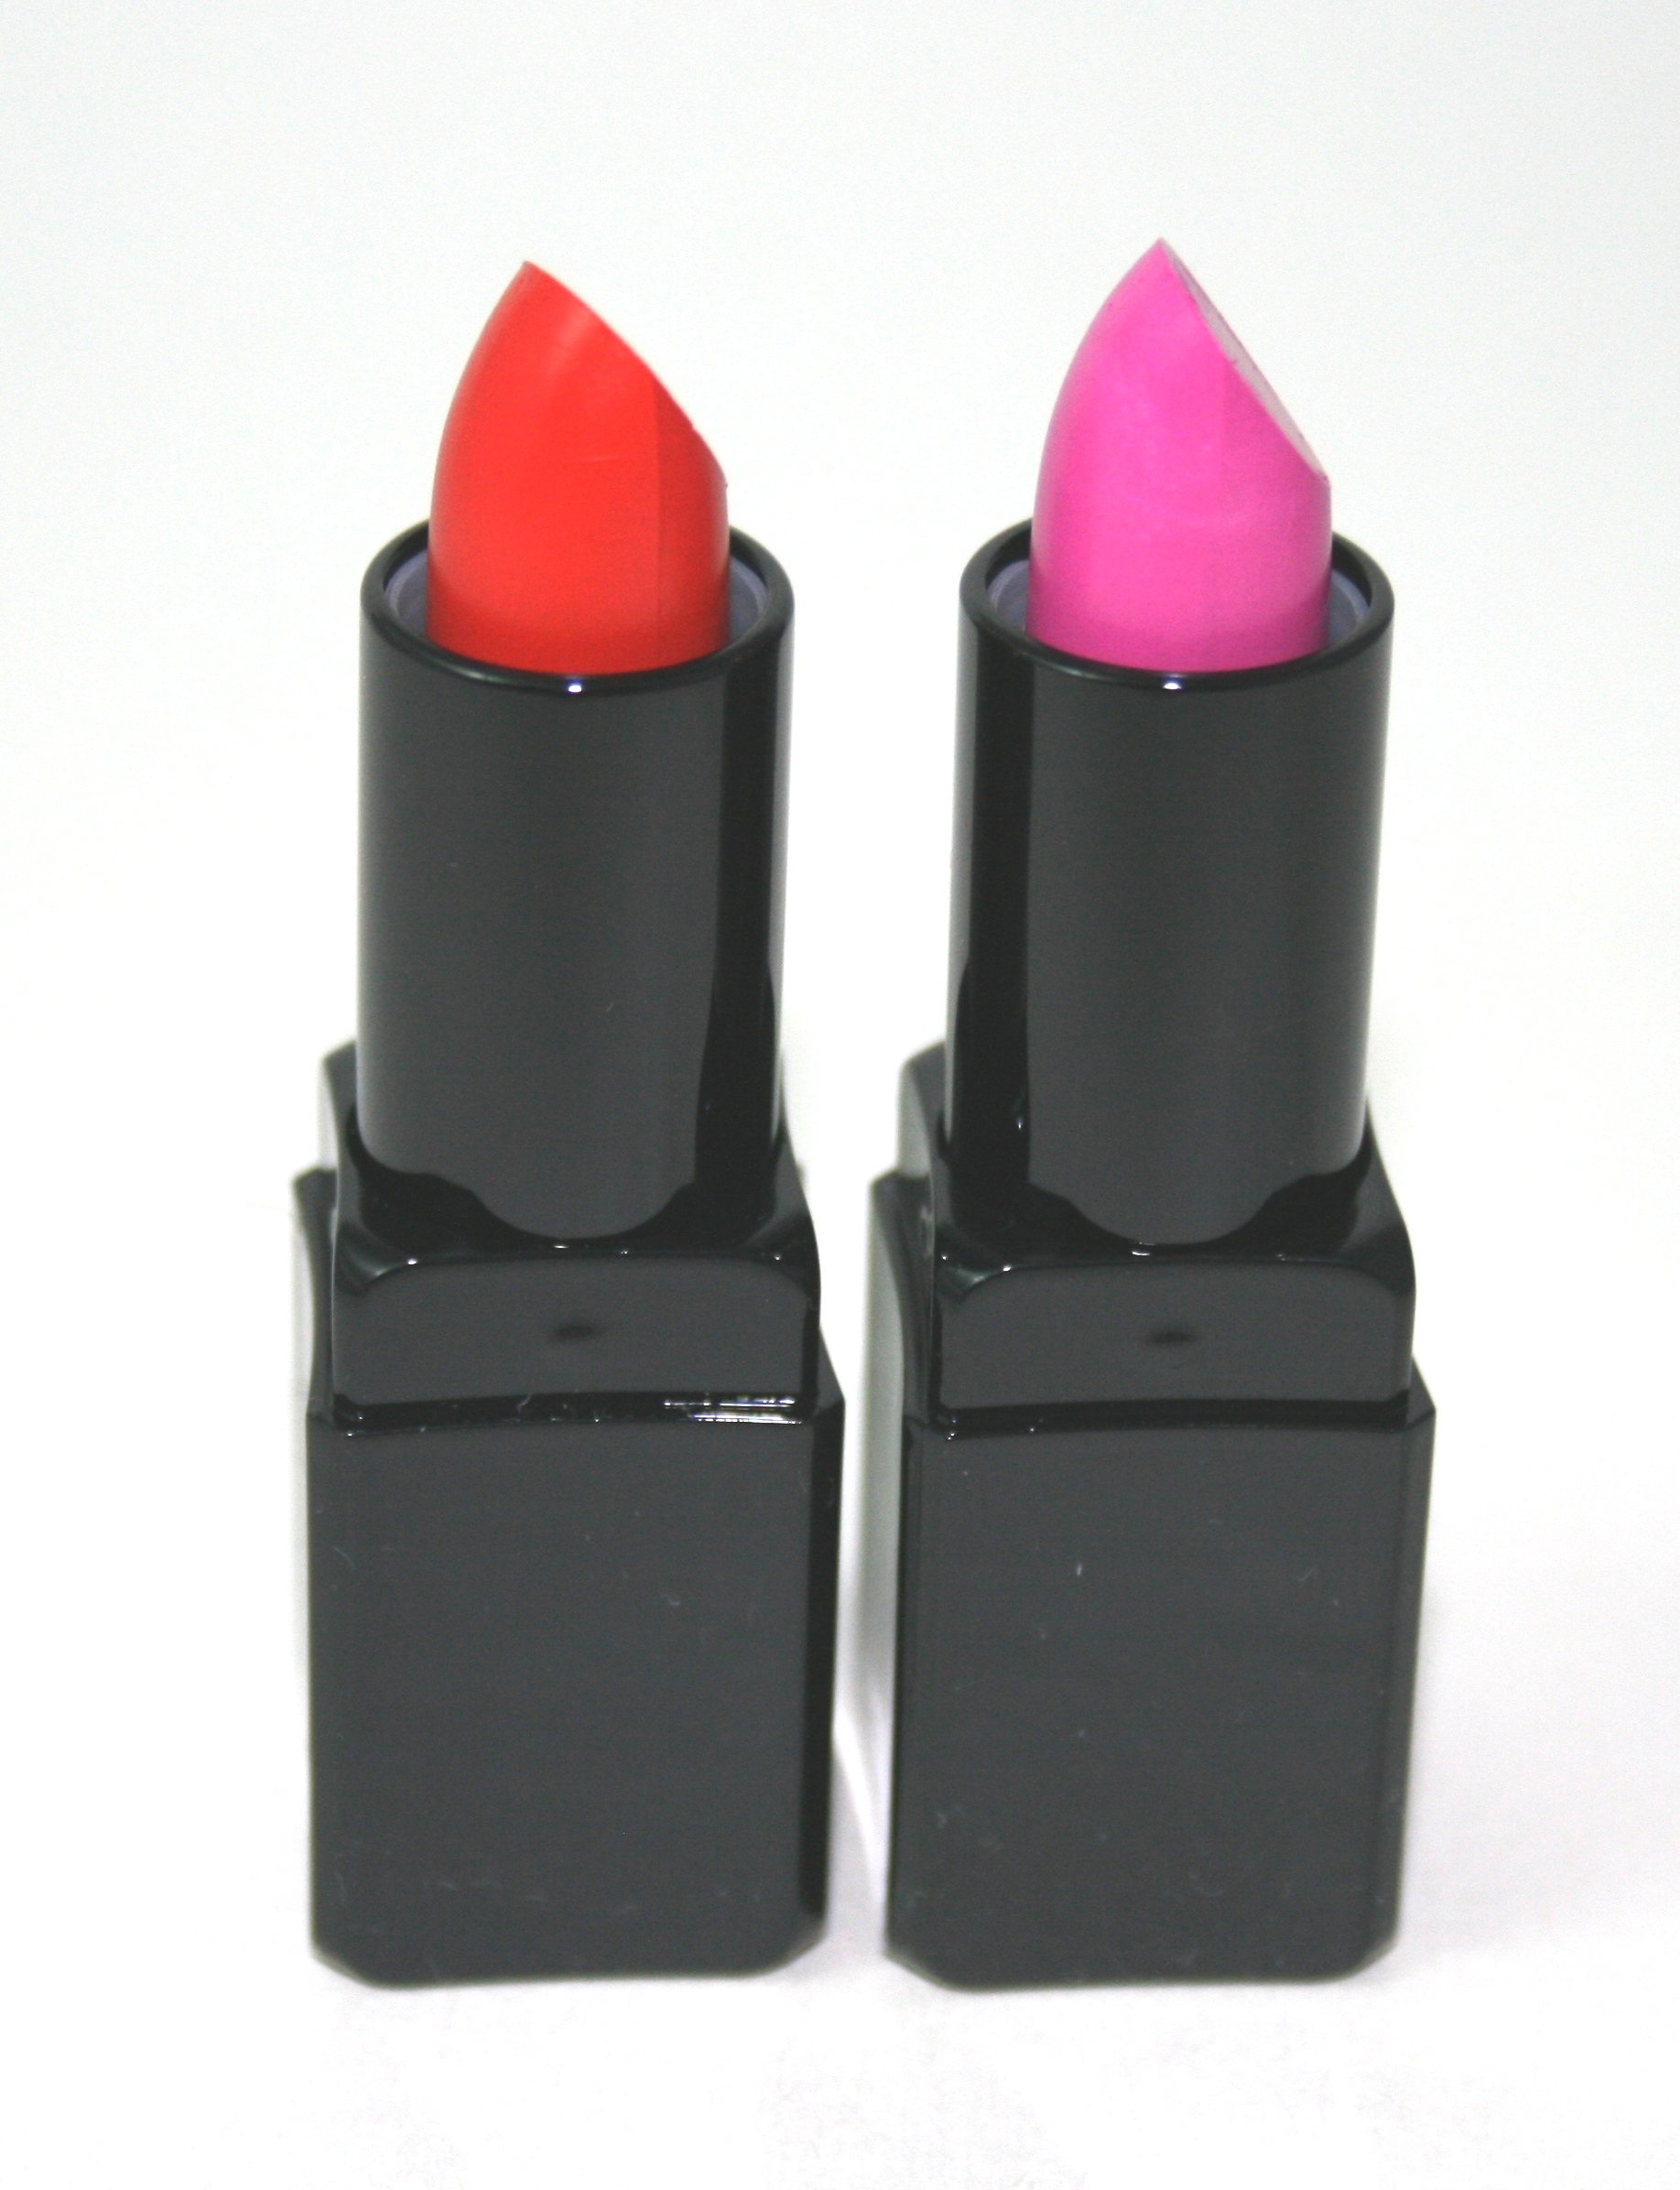 Illamasqua Glamore Satin Finish Lipsticks in Luster and Soaked